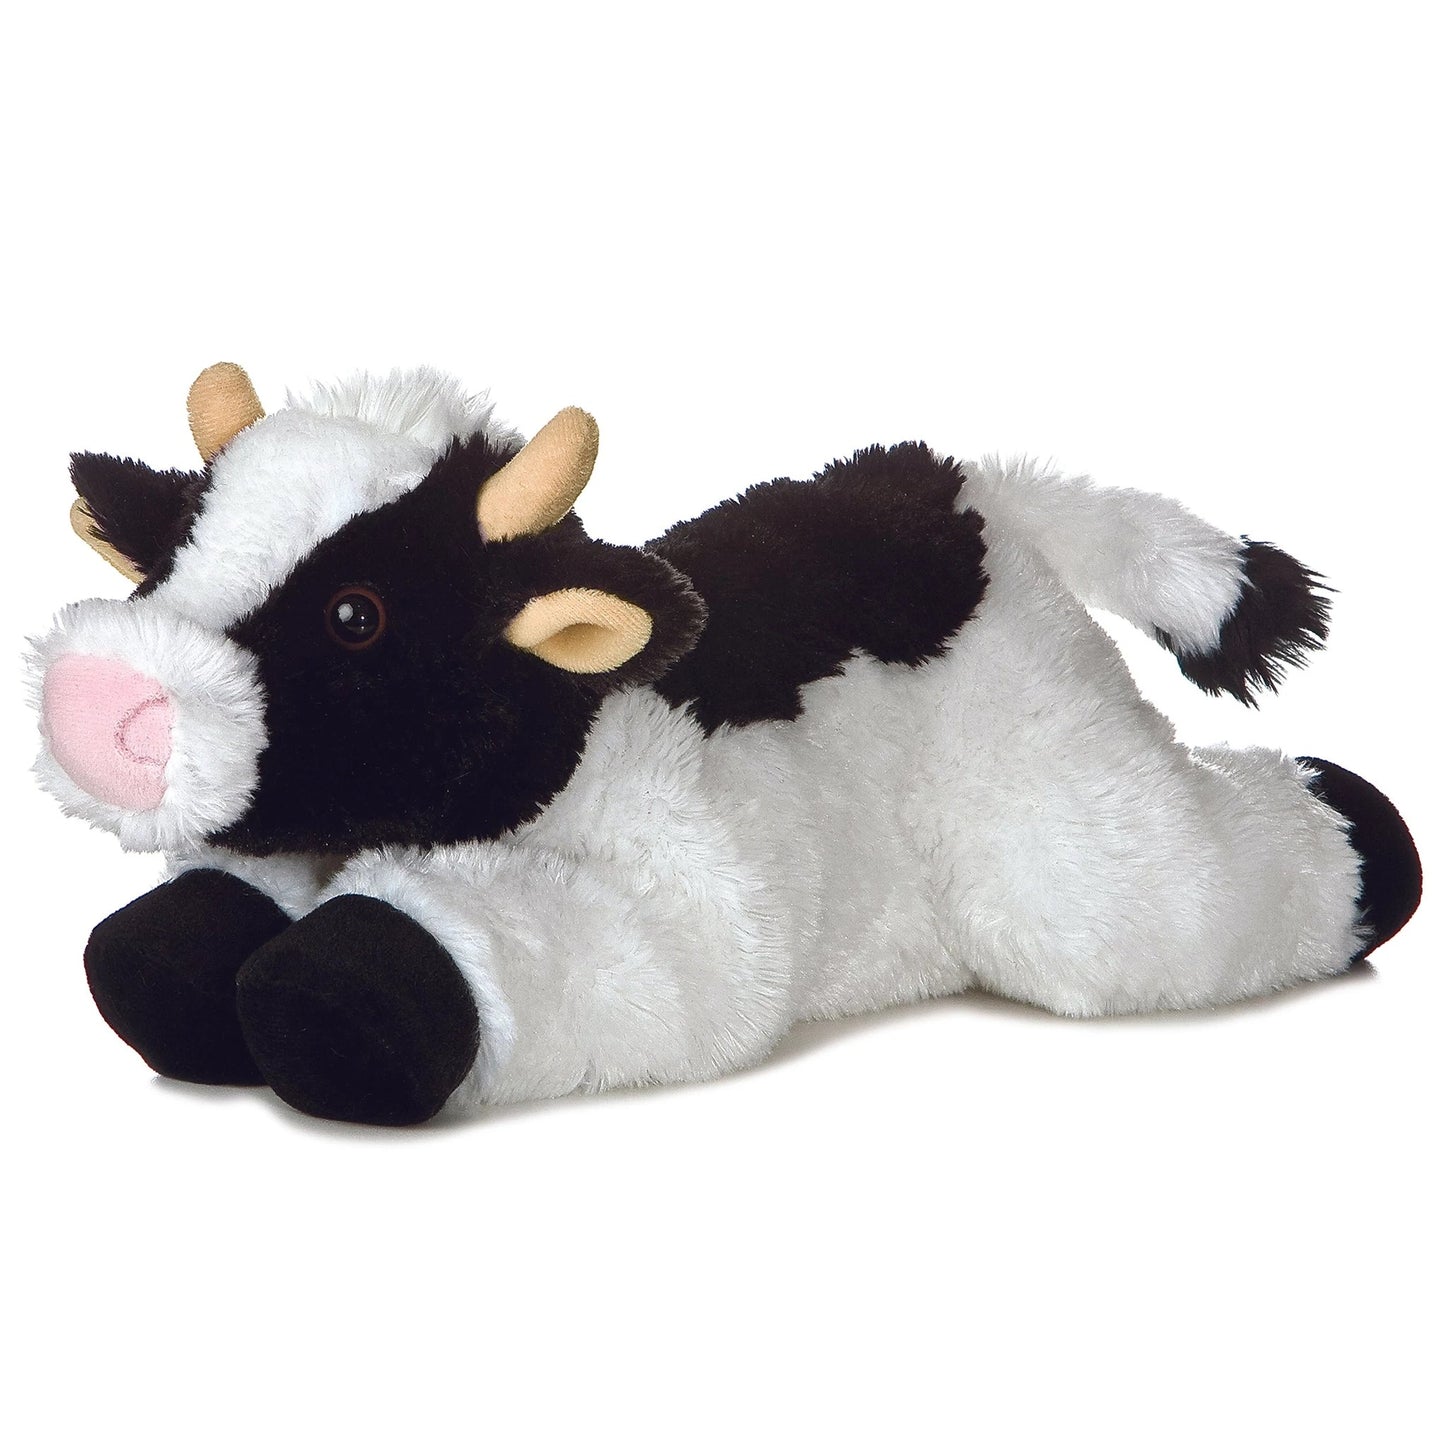 Maybell Plush Cow Stuffed Animal